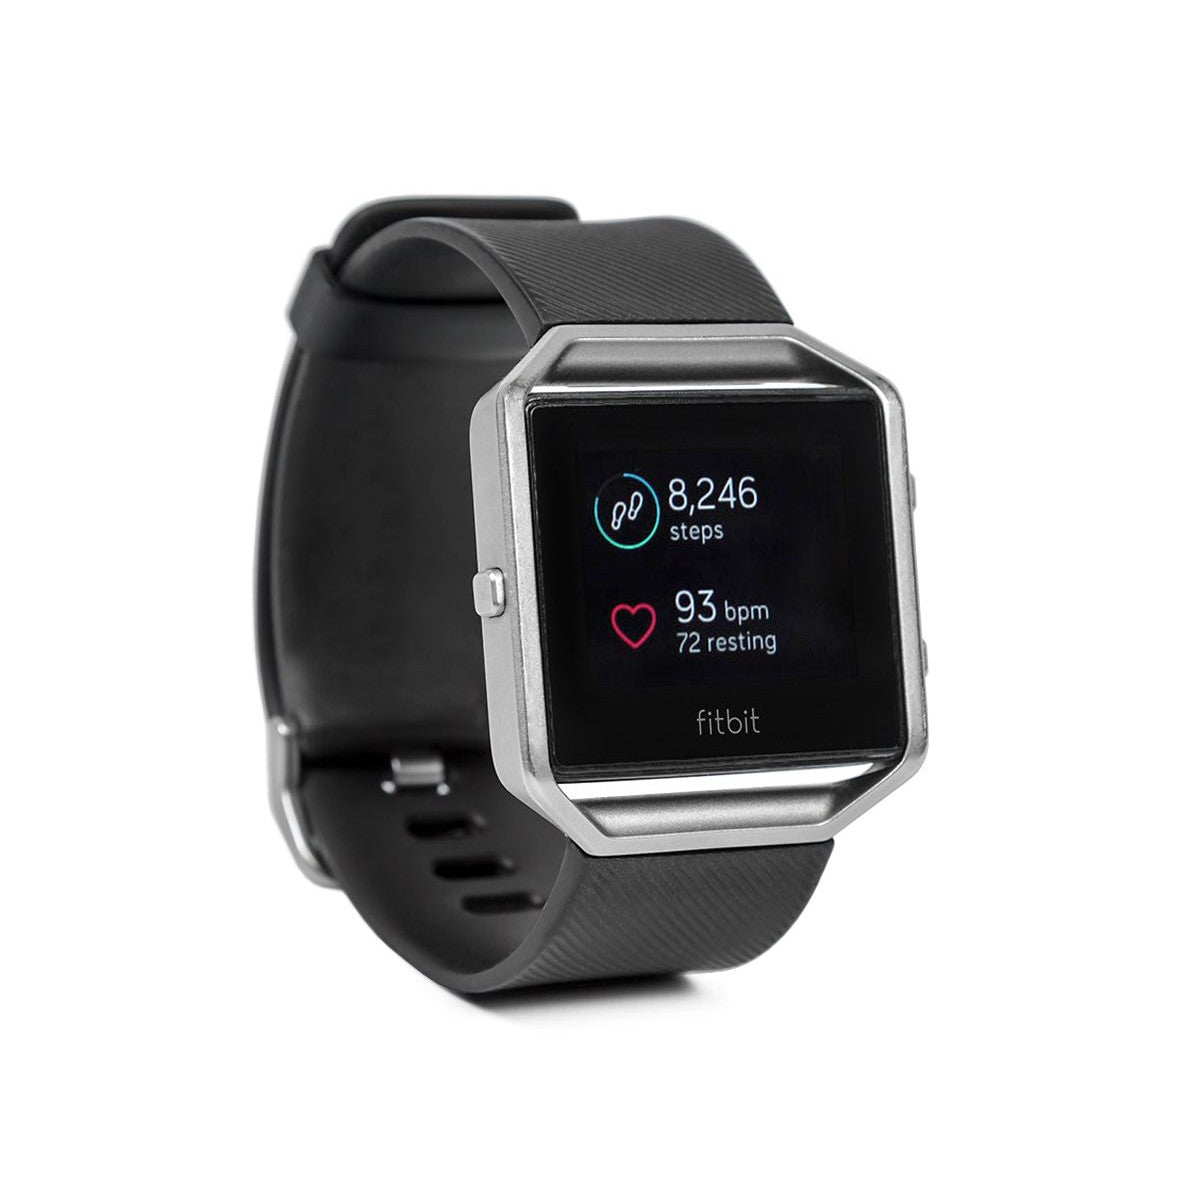 Fitbit Blaze Fitness Activity Tracker - Black - Refurbished Good